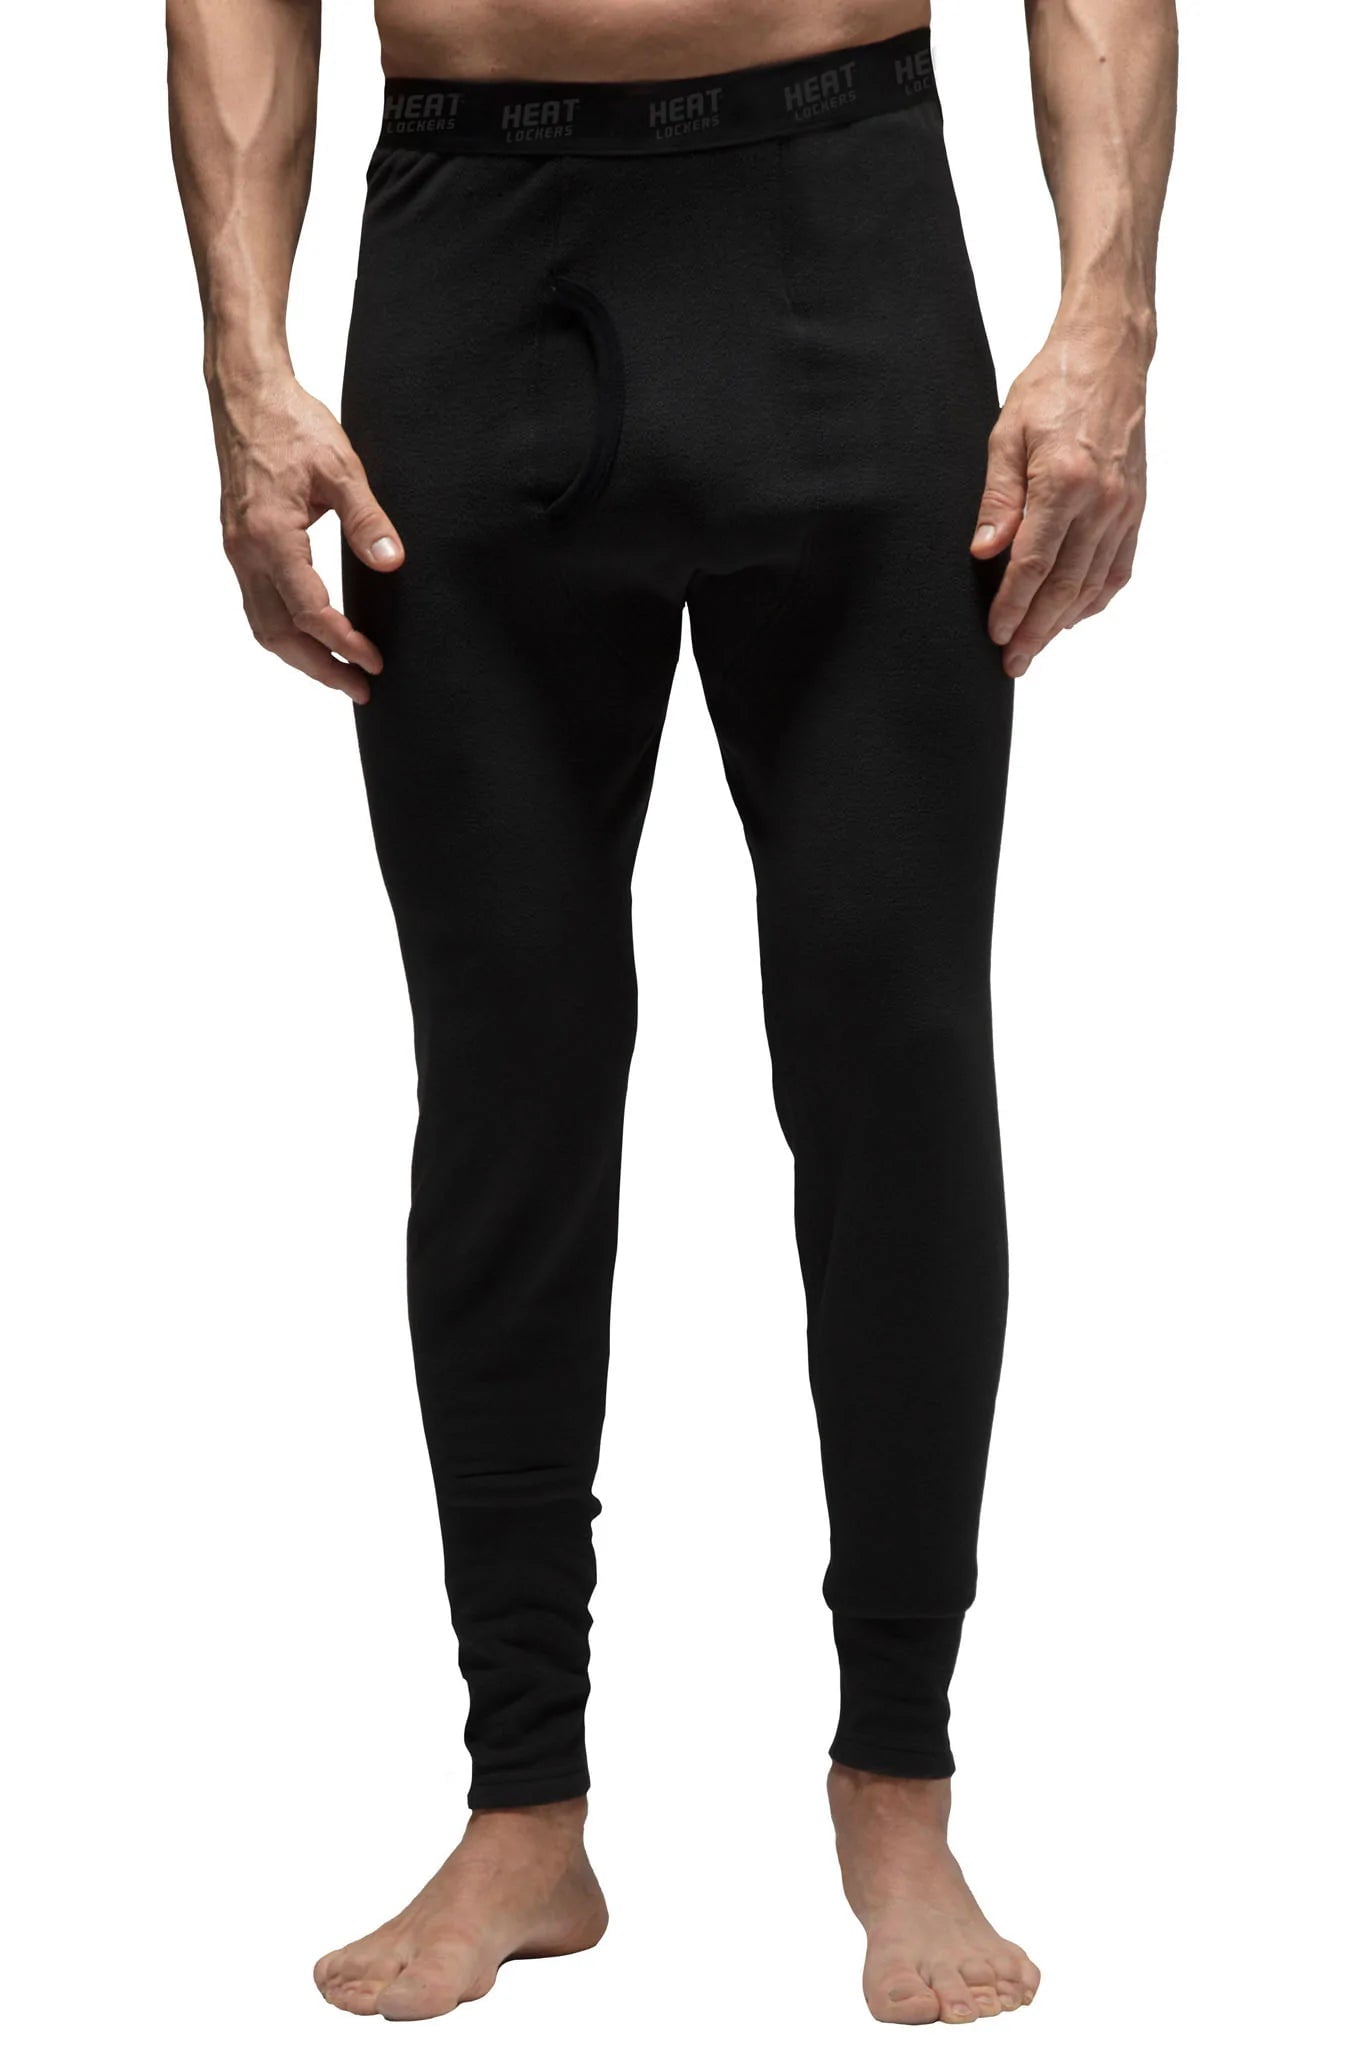 32 DEGREES Men's Heat Performance Thermal Baselayer Pants 2-Pack, Black  Medium